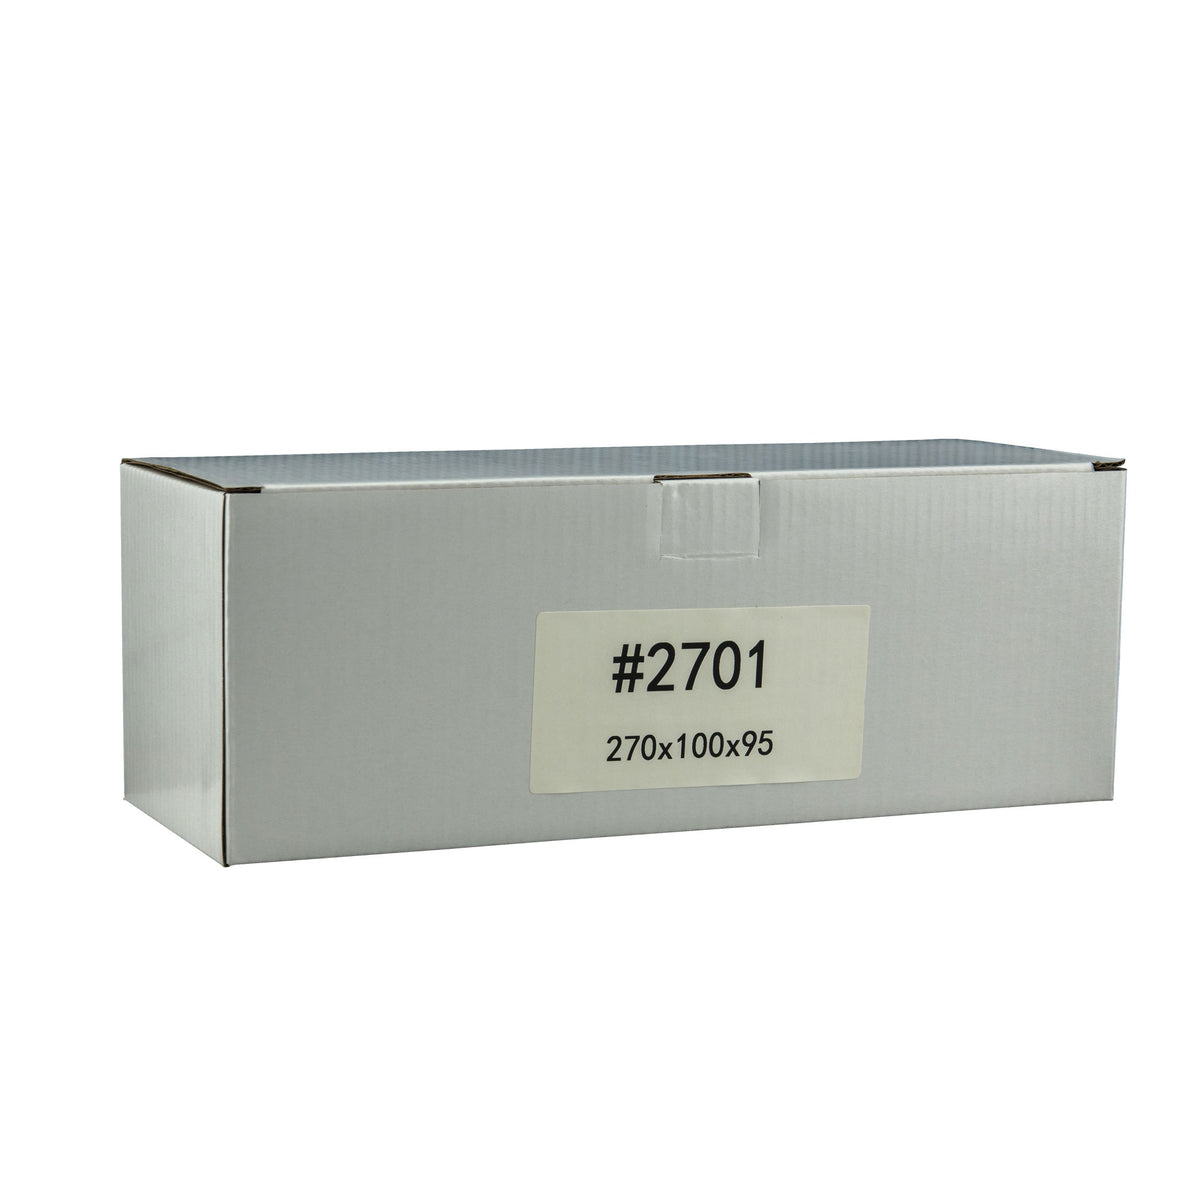 270mm x 100mm x 95mm White Carton Cardboard Shipping Box (#2701)